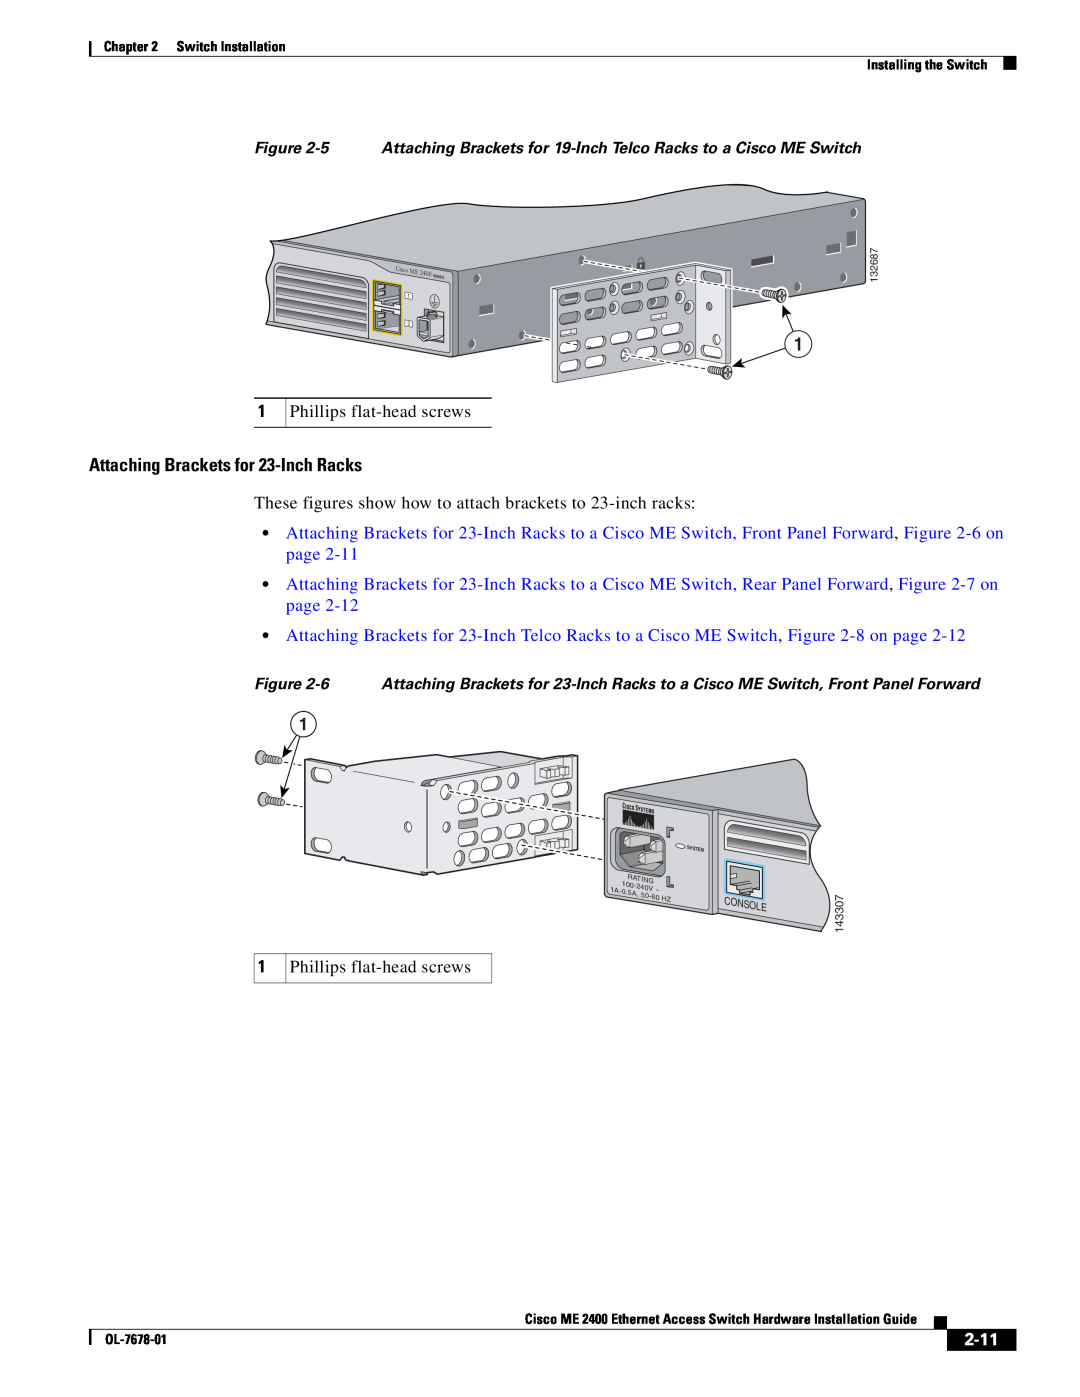 Cisco Systems ME 2400 manual Attaching Brackets for 23-Inch Racks, 2-11, Cisco ME 